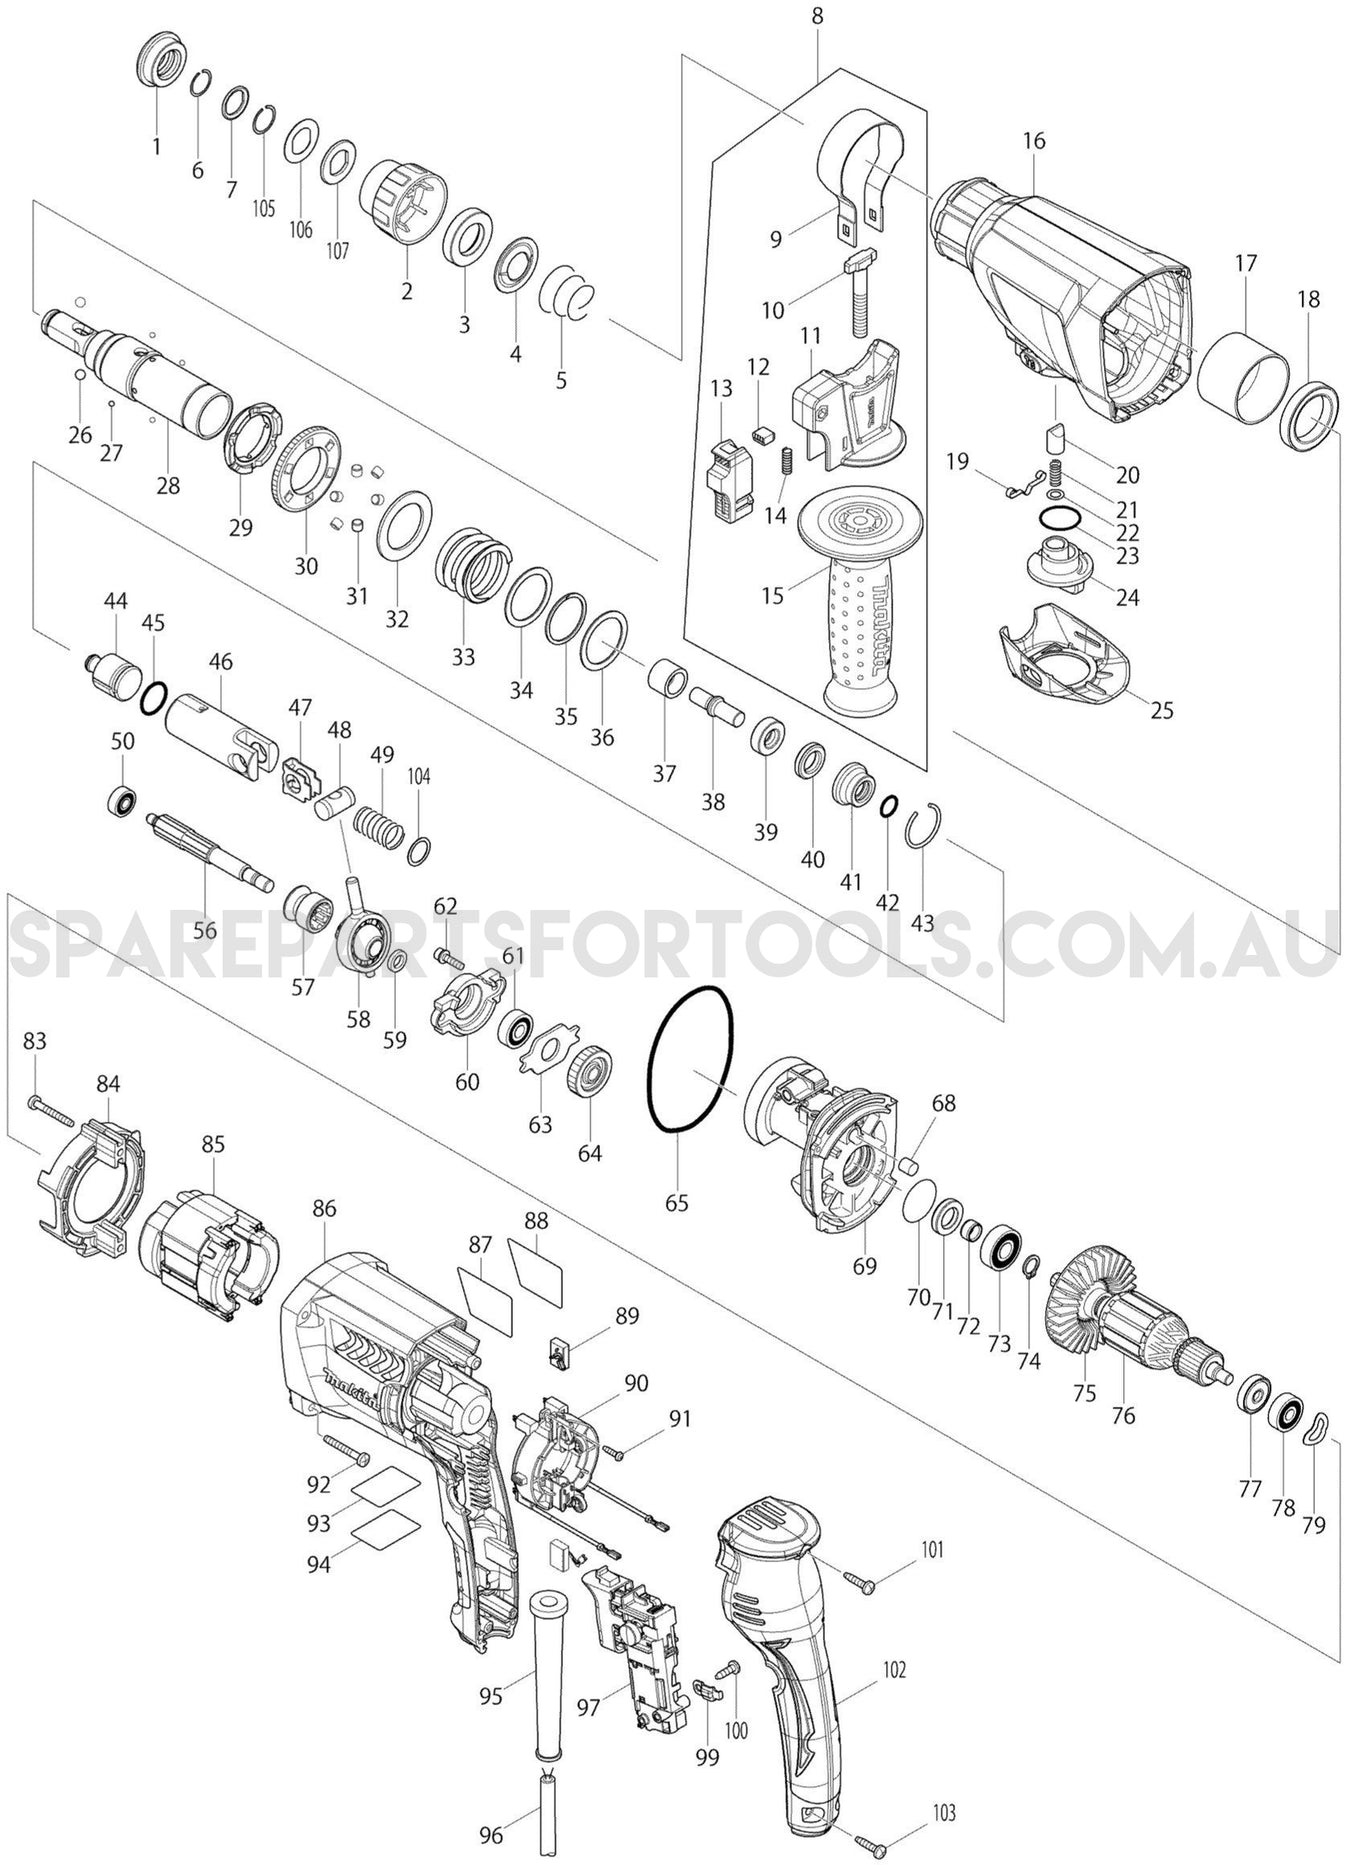 Makita HR2300 Spare Parts